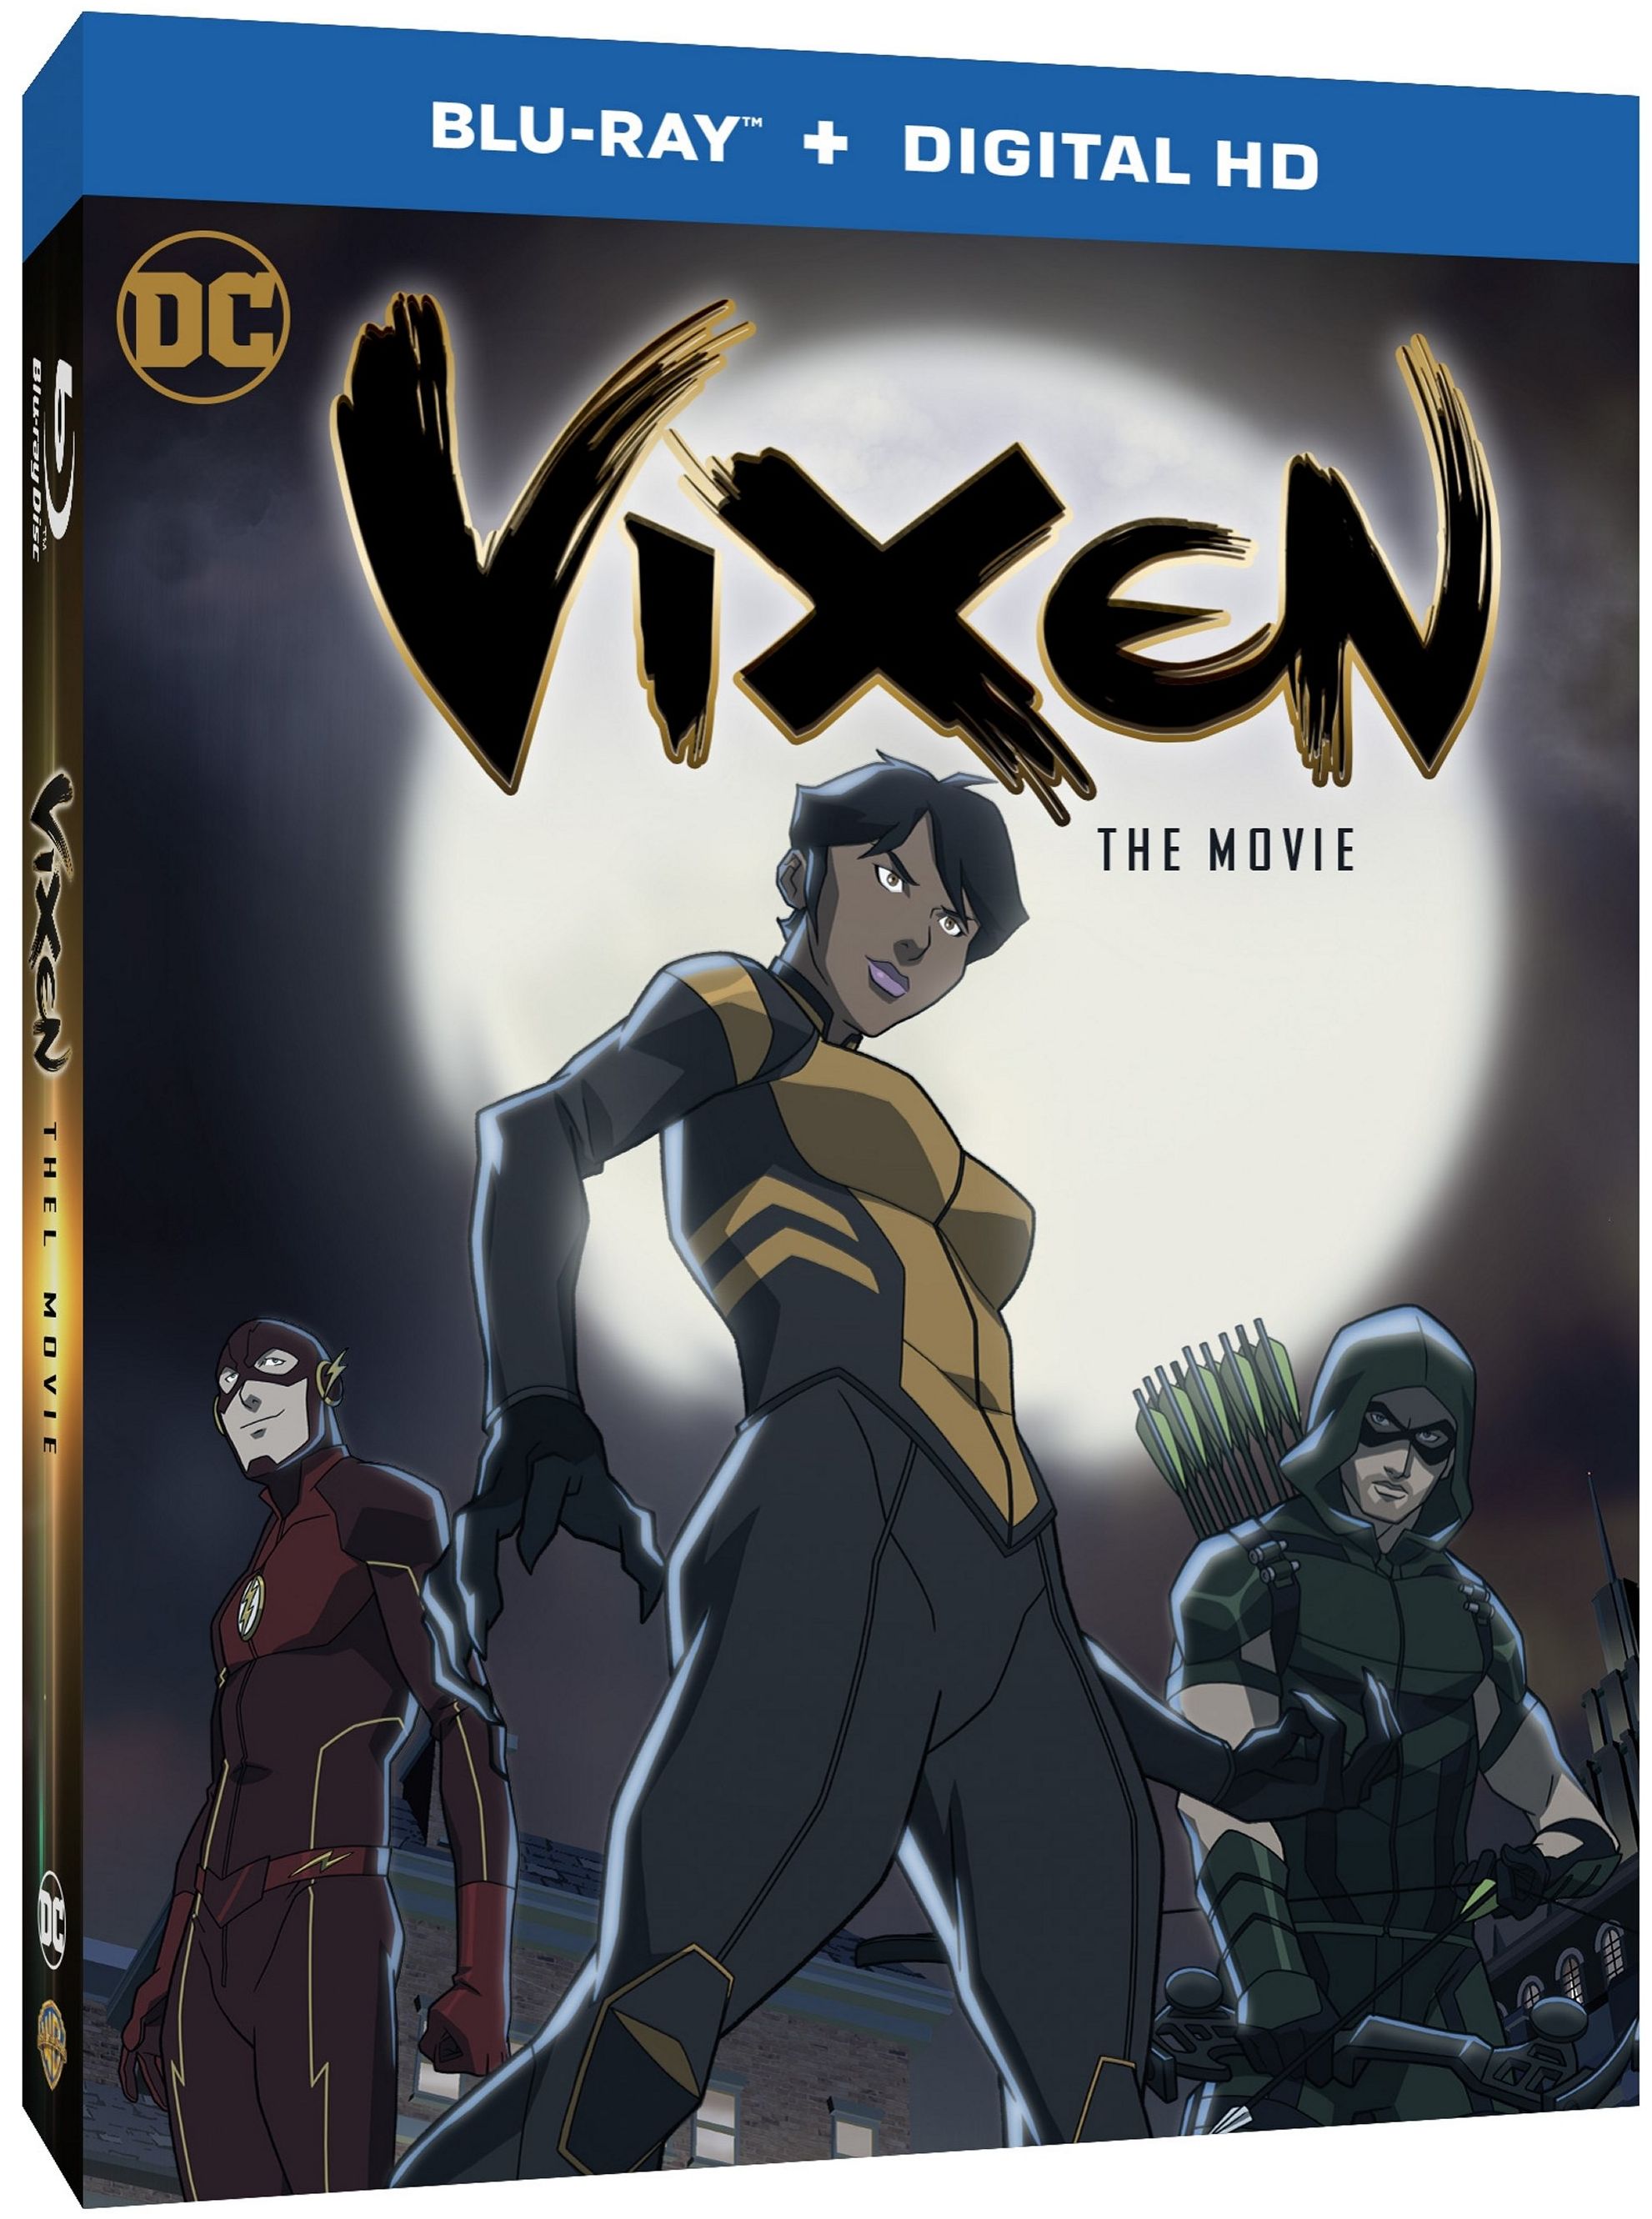 Blu-Ray Box Art for Vixen: The Movie